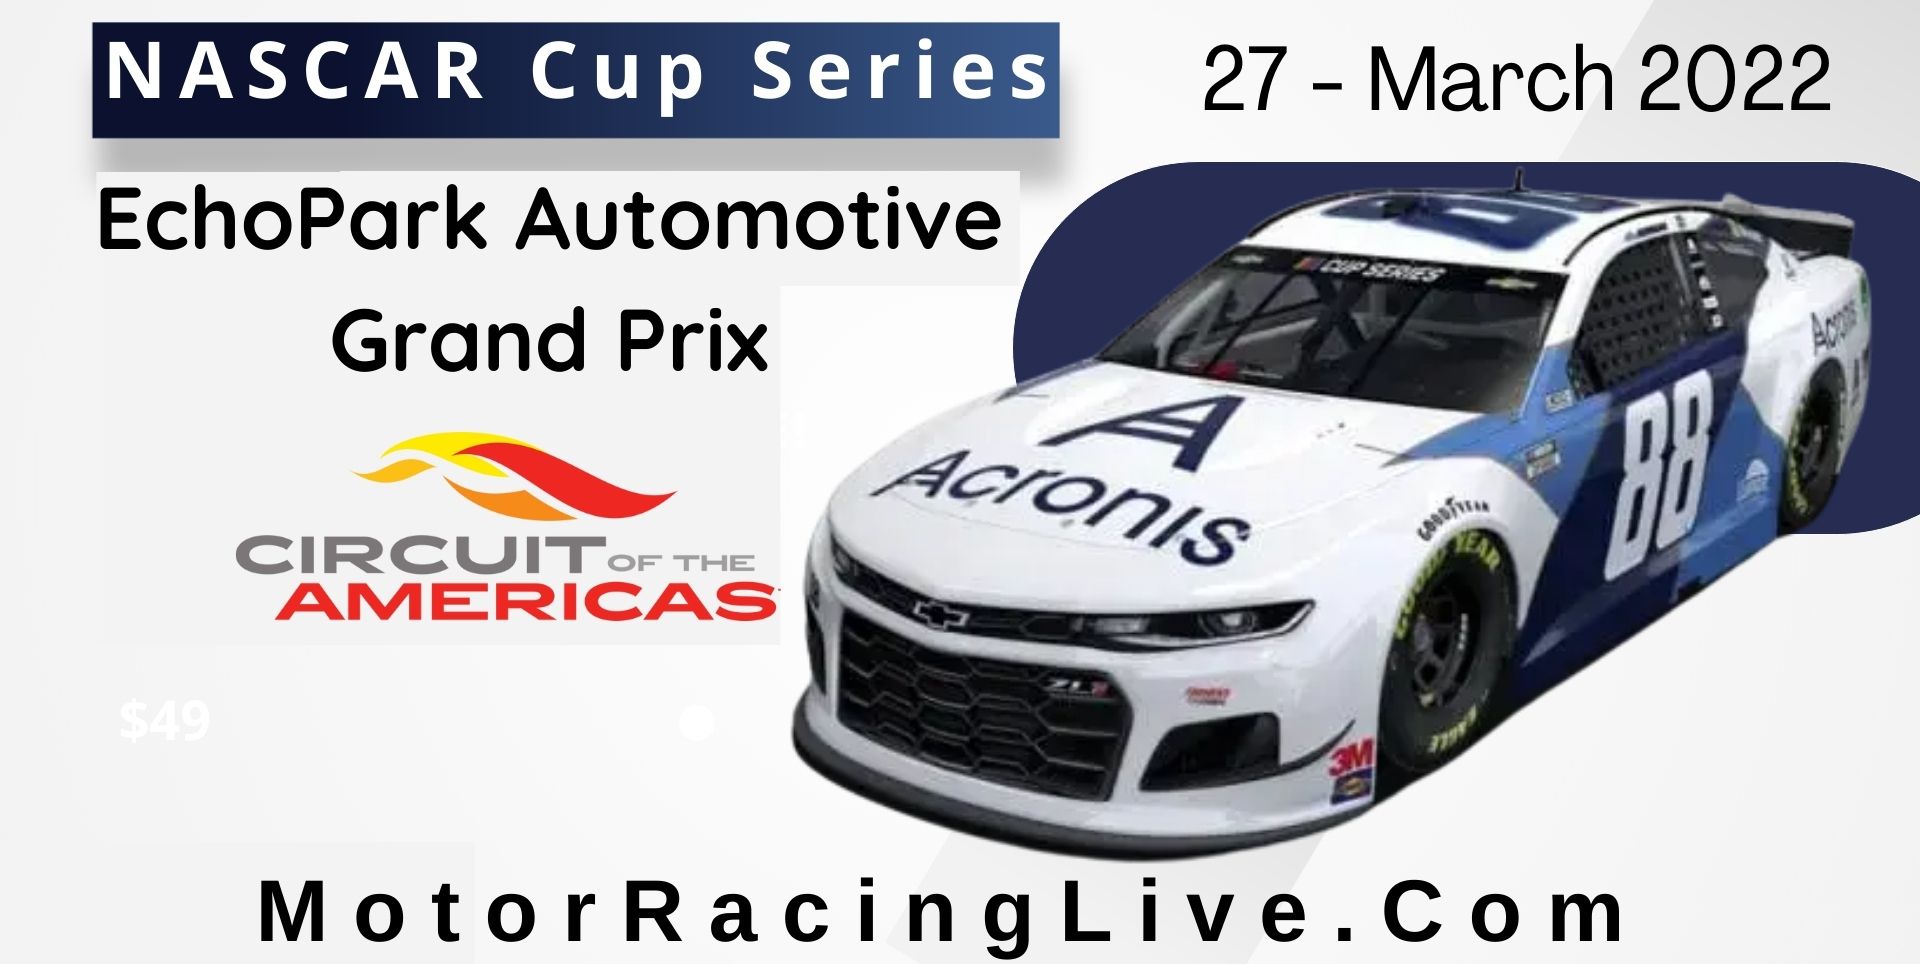 Nascar Cup Series race at COTA Live